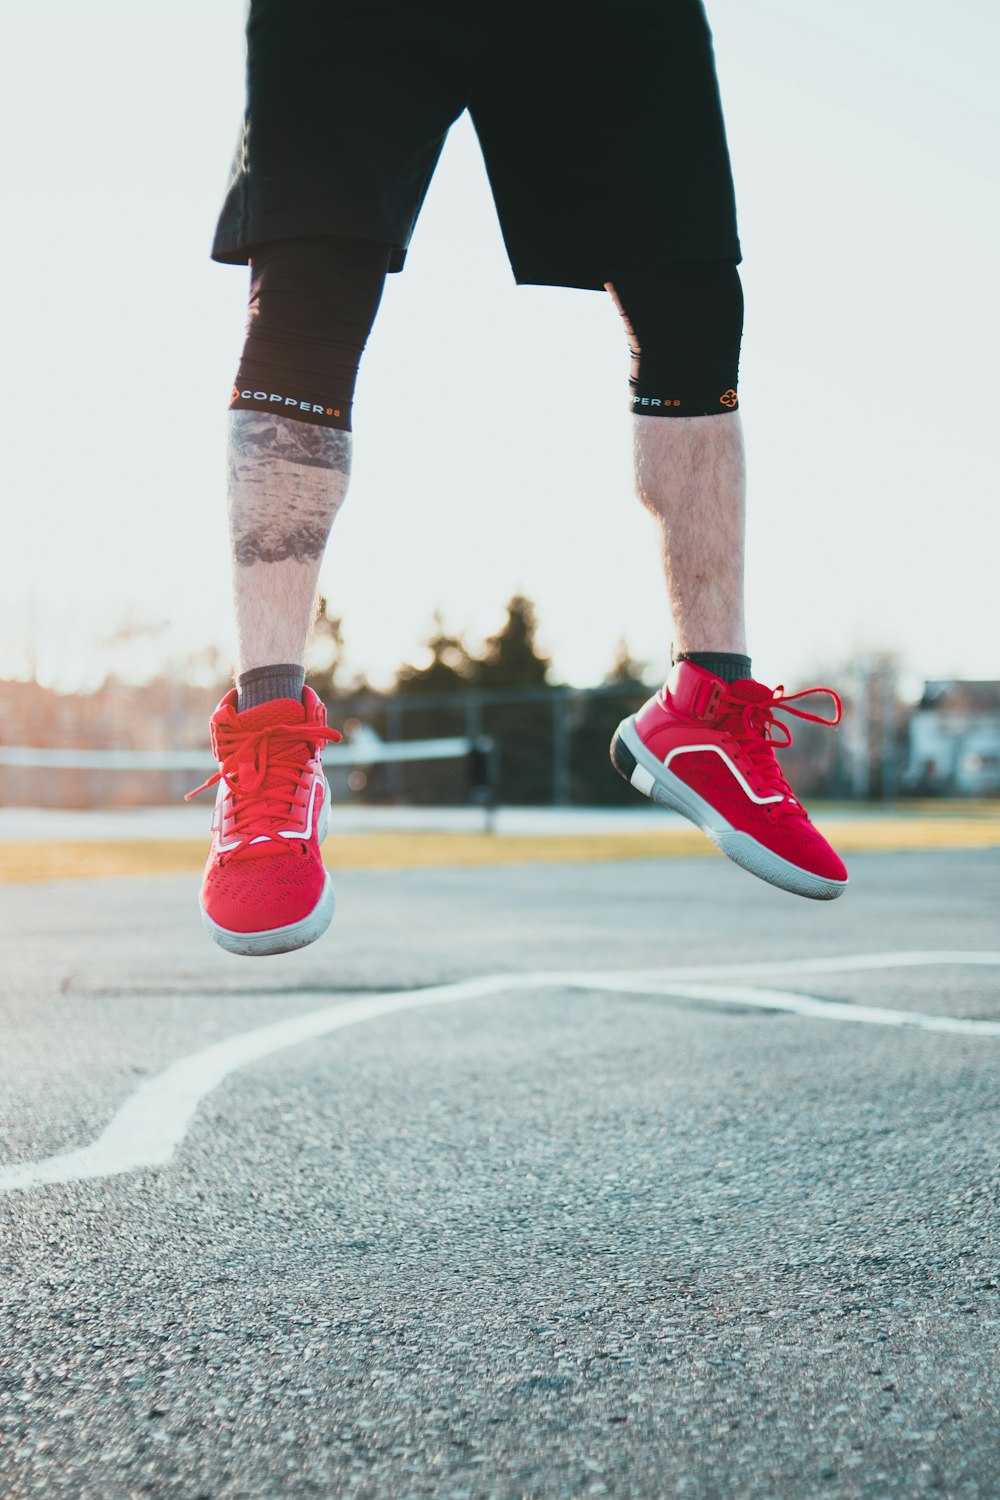 person in red nike sneakers photo – Free Footwear Image on Unsplash